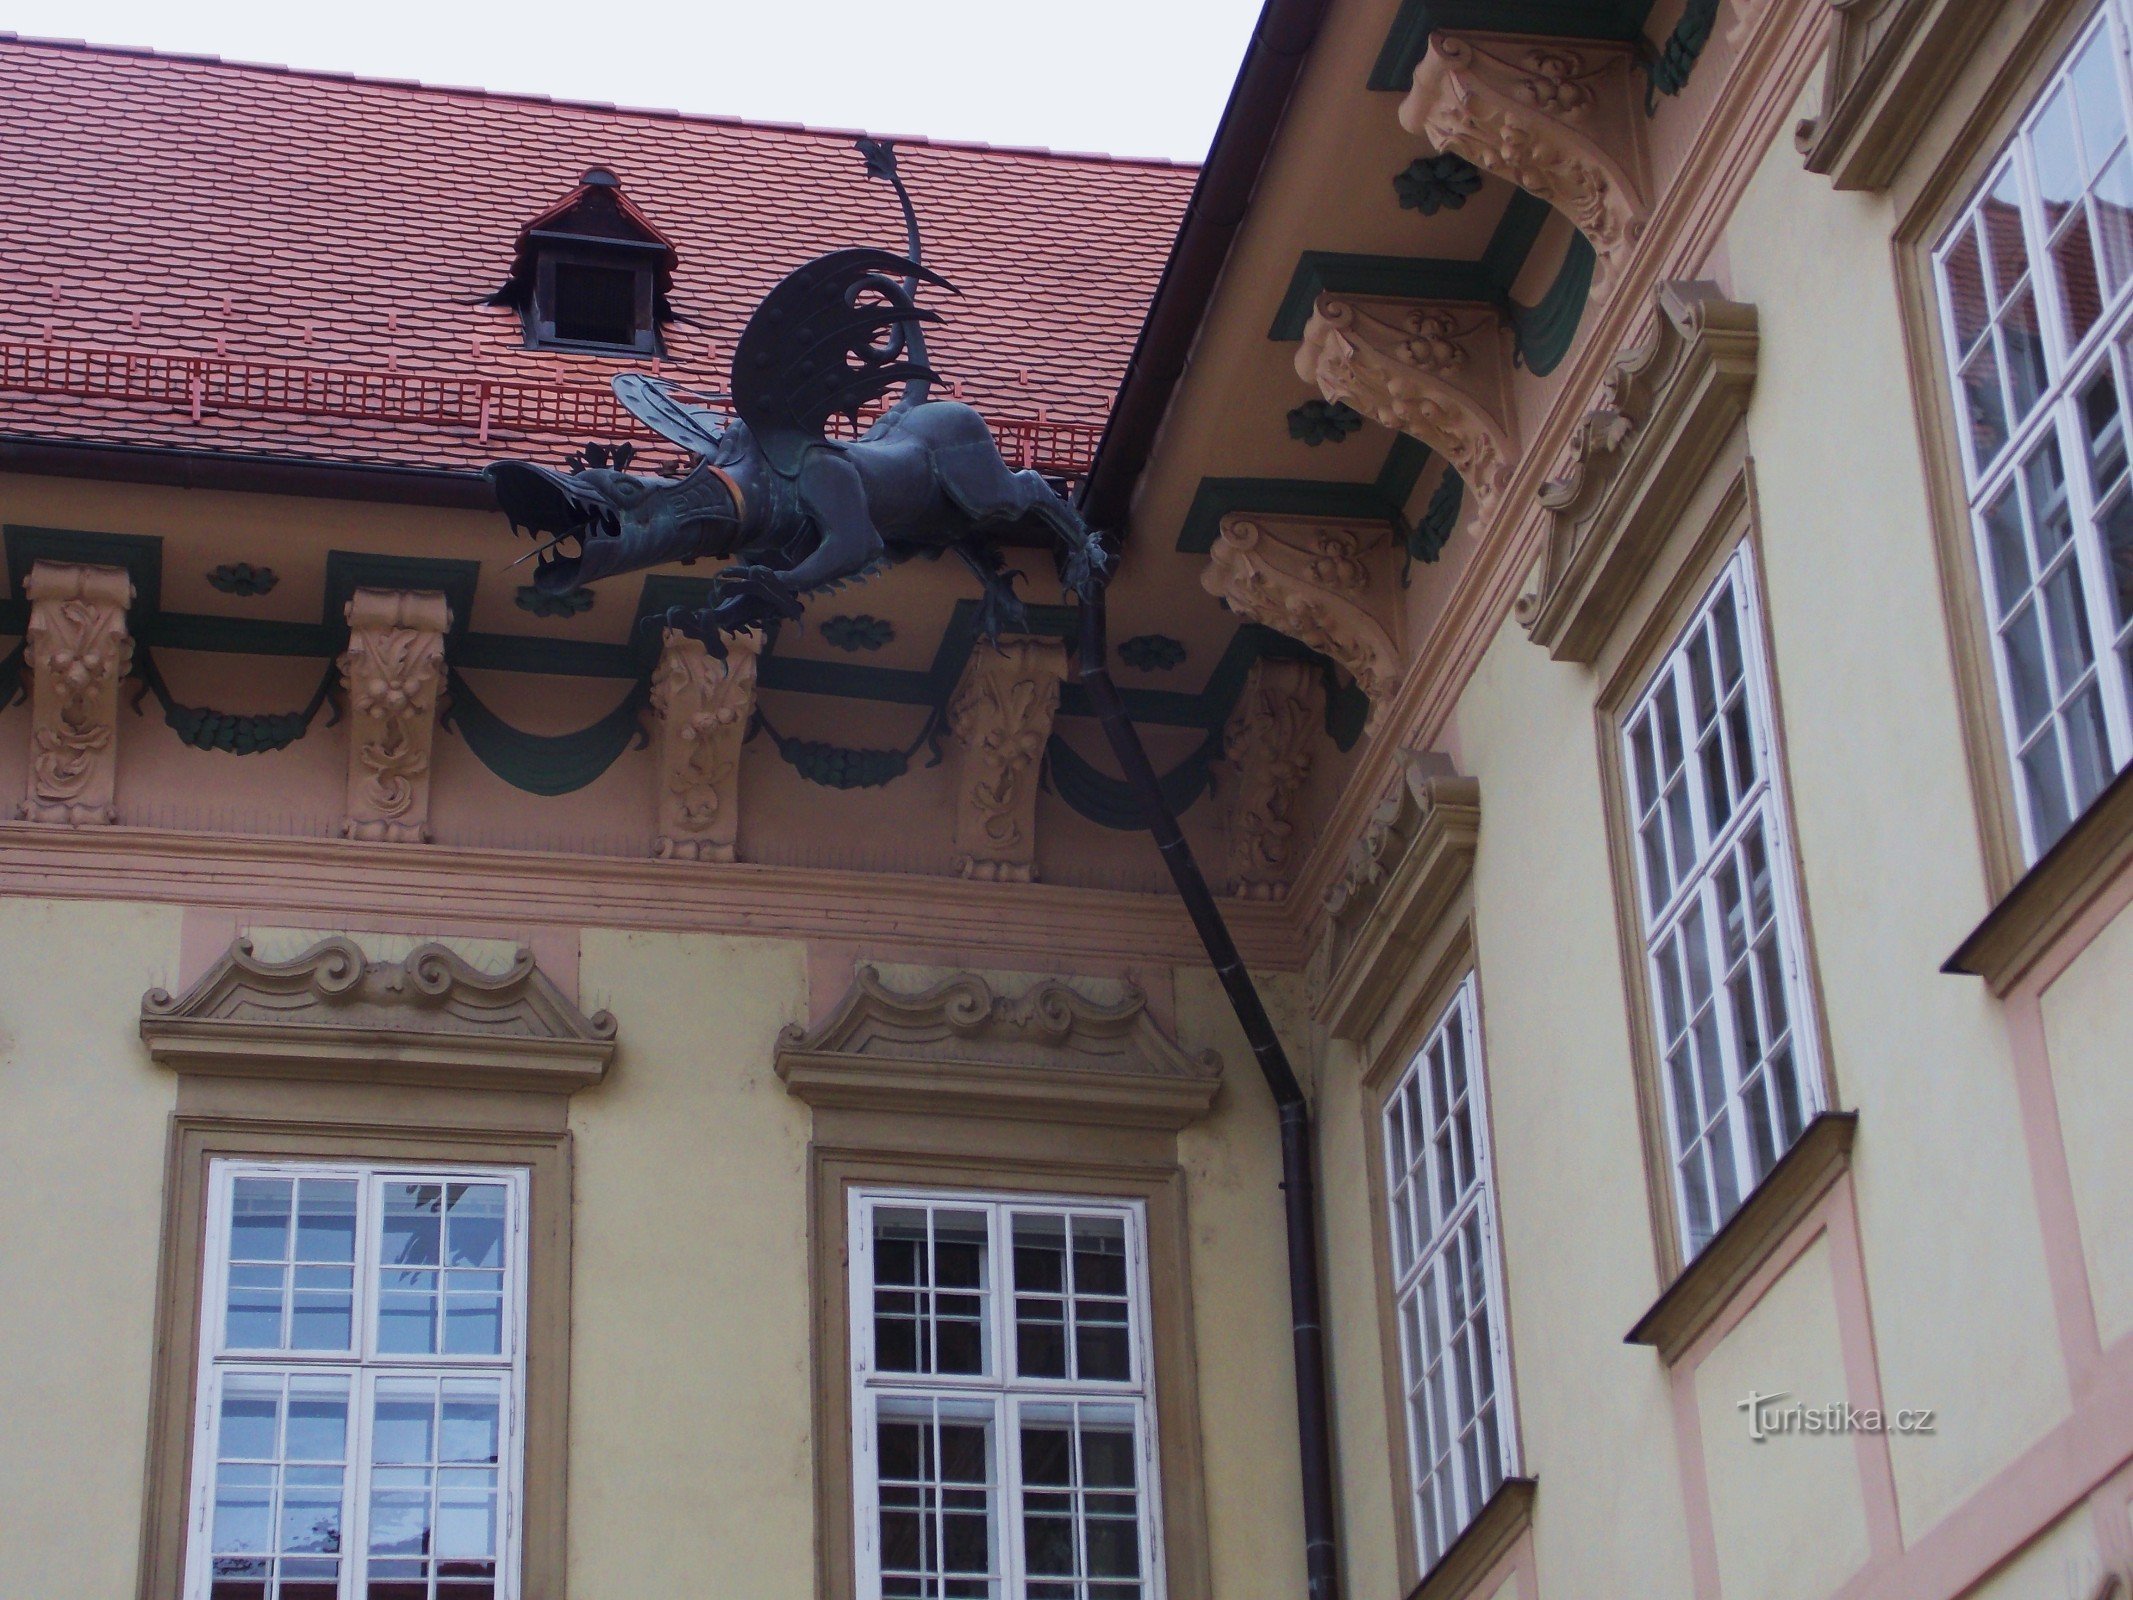 Kulturmonument i Brno - Nyt rådhus